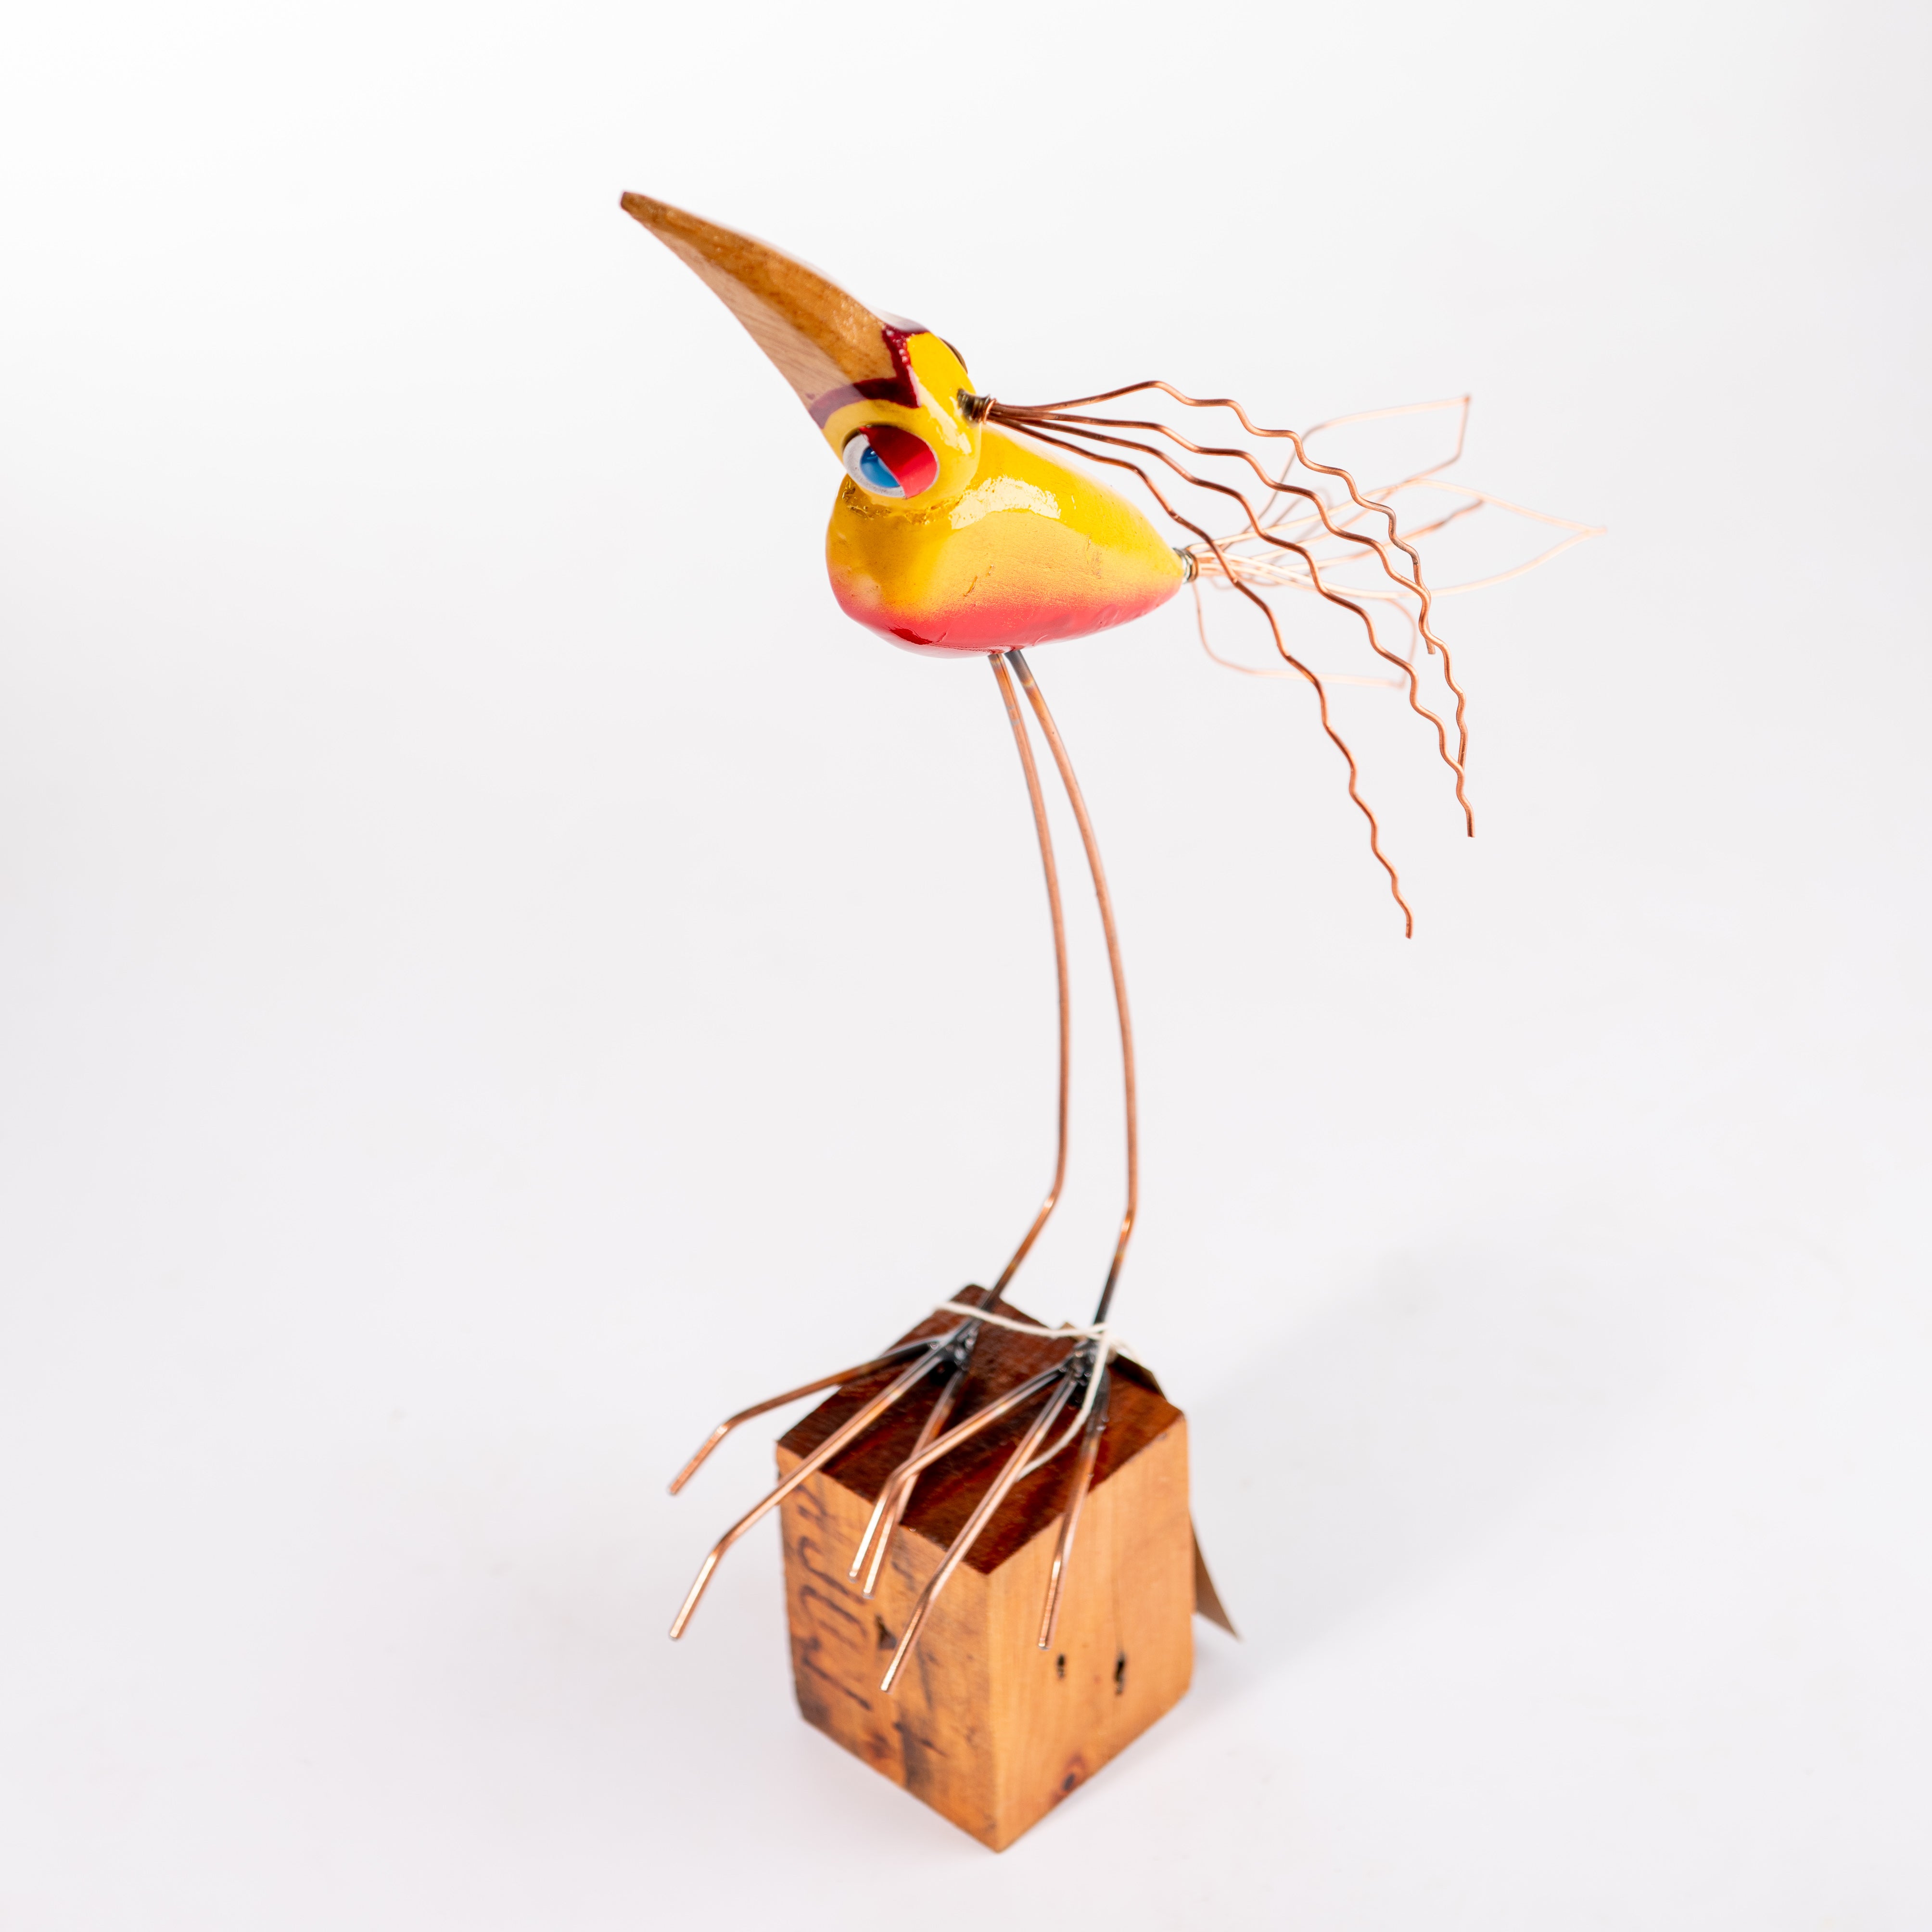 Exotic "Bird with Attitude" Sculpture